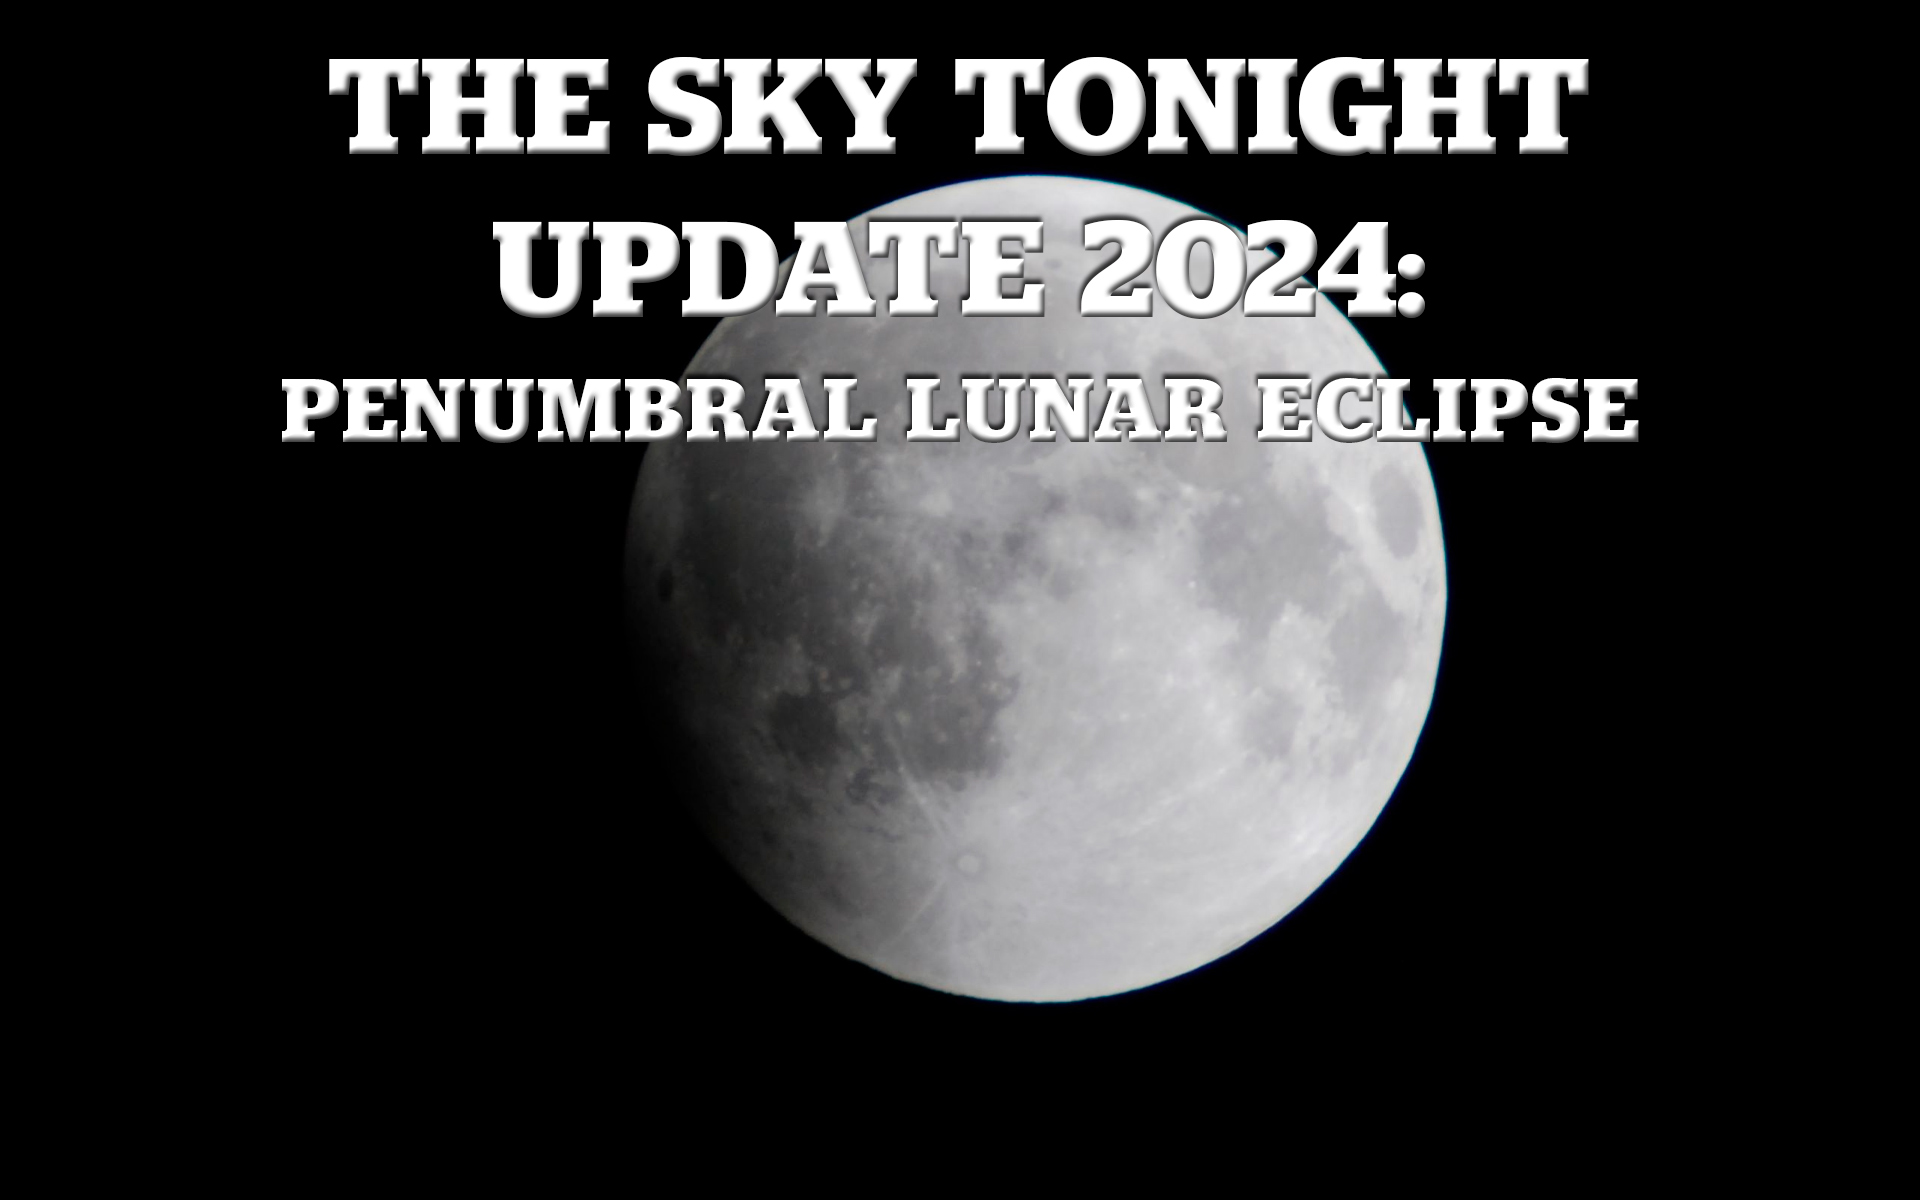 The Sky Tonight Update: Penumbral Lunar Eclipse